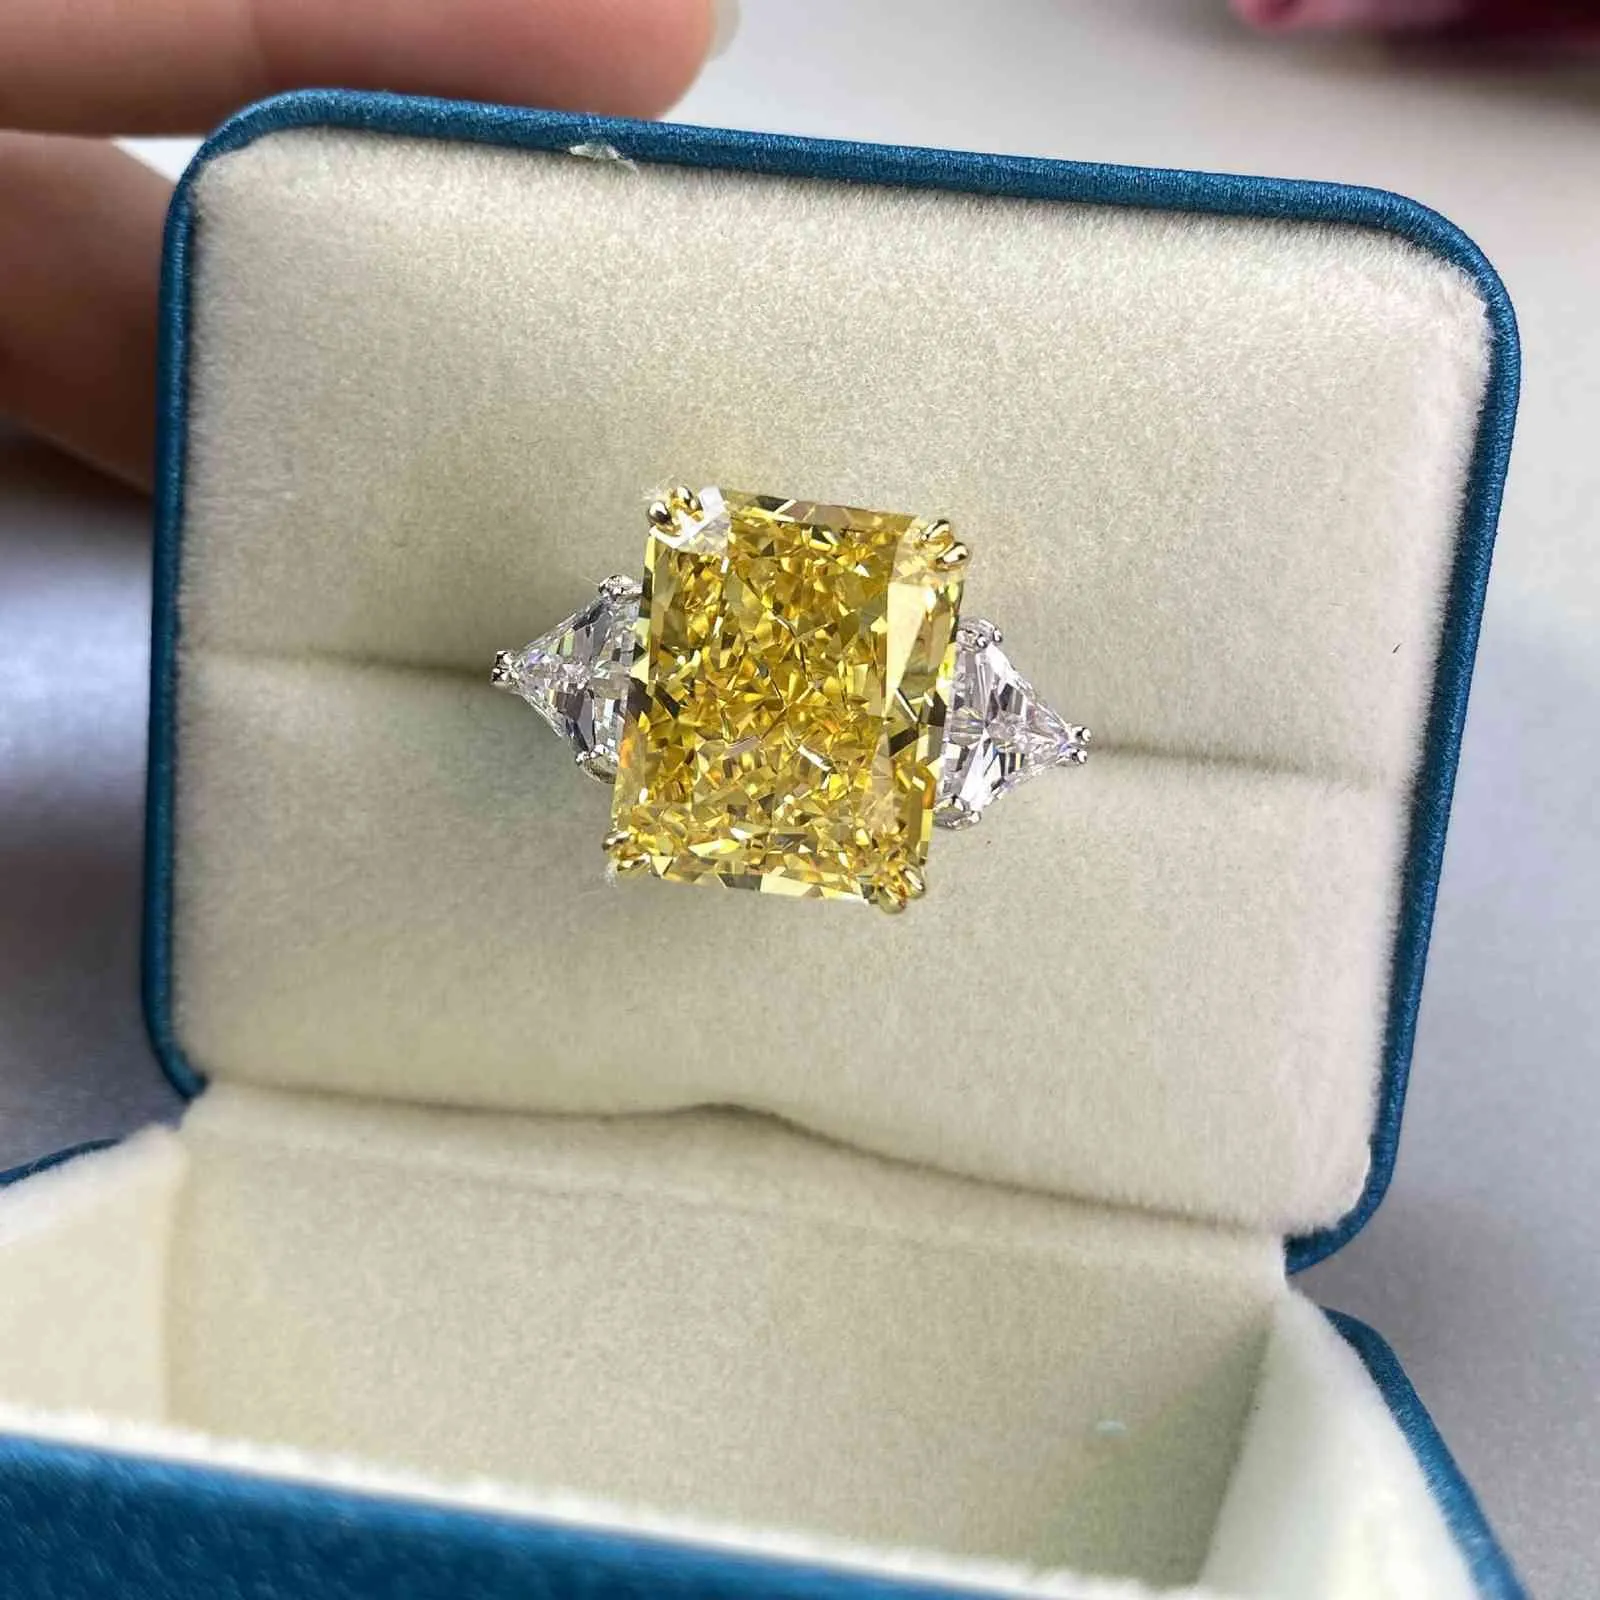 HIBRIDE Luxe Sparking 100% 925 Sterling Silver Yellow Diamond Femmes Anneaux De Mariée Cadeaux De Fête De Mariage Fine Jewelry Bijoux R-273